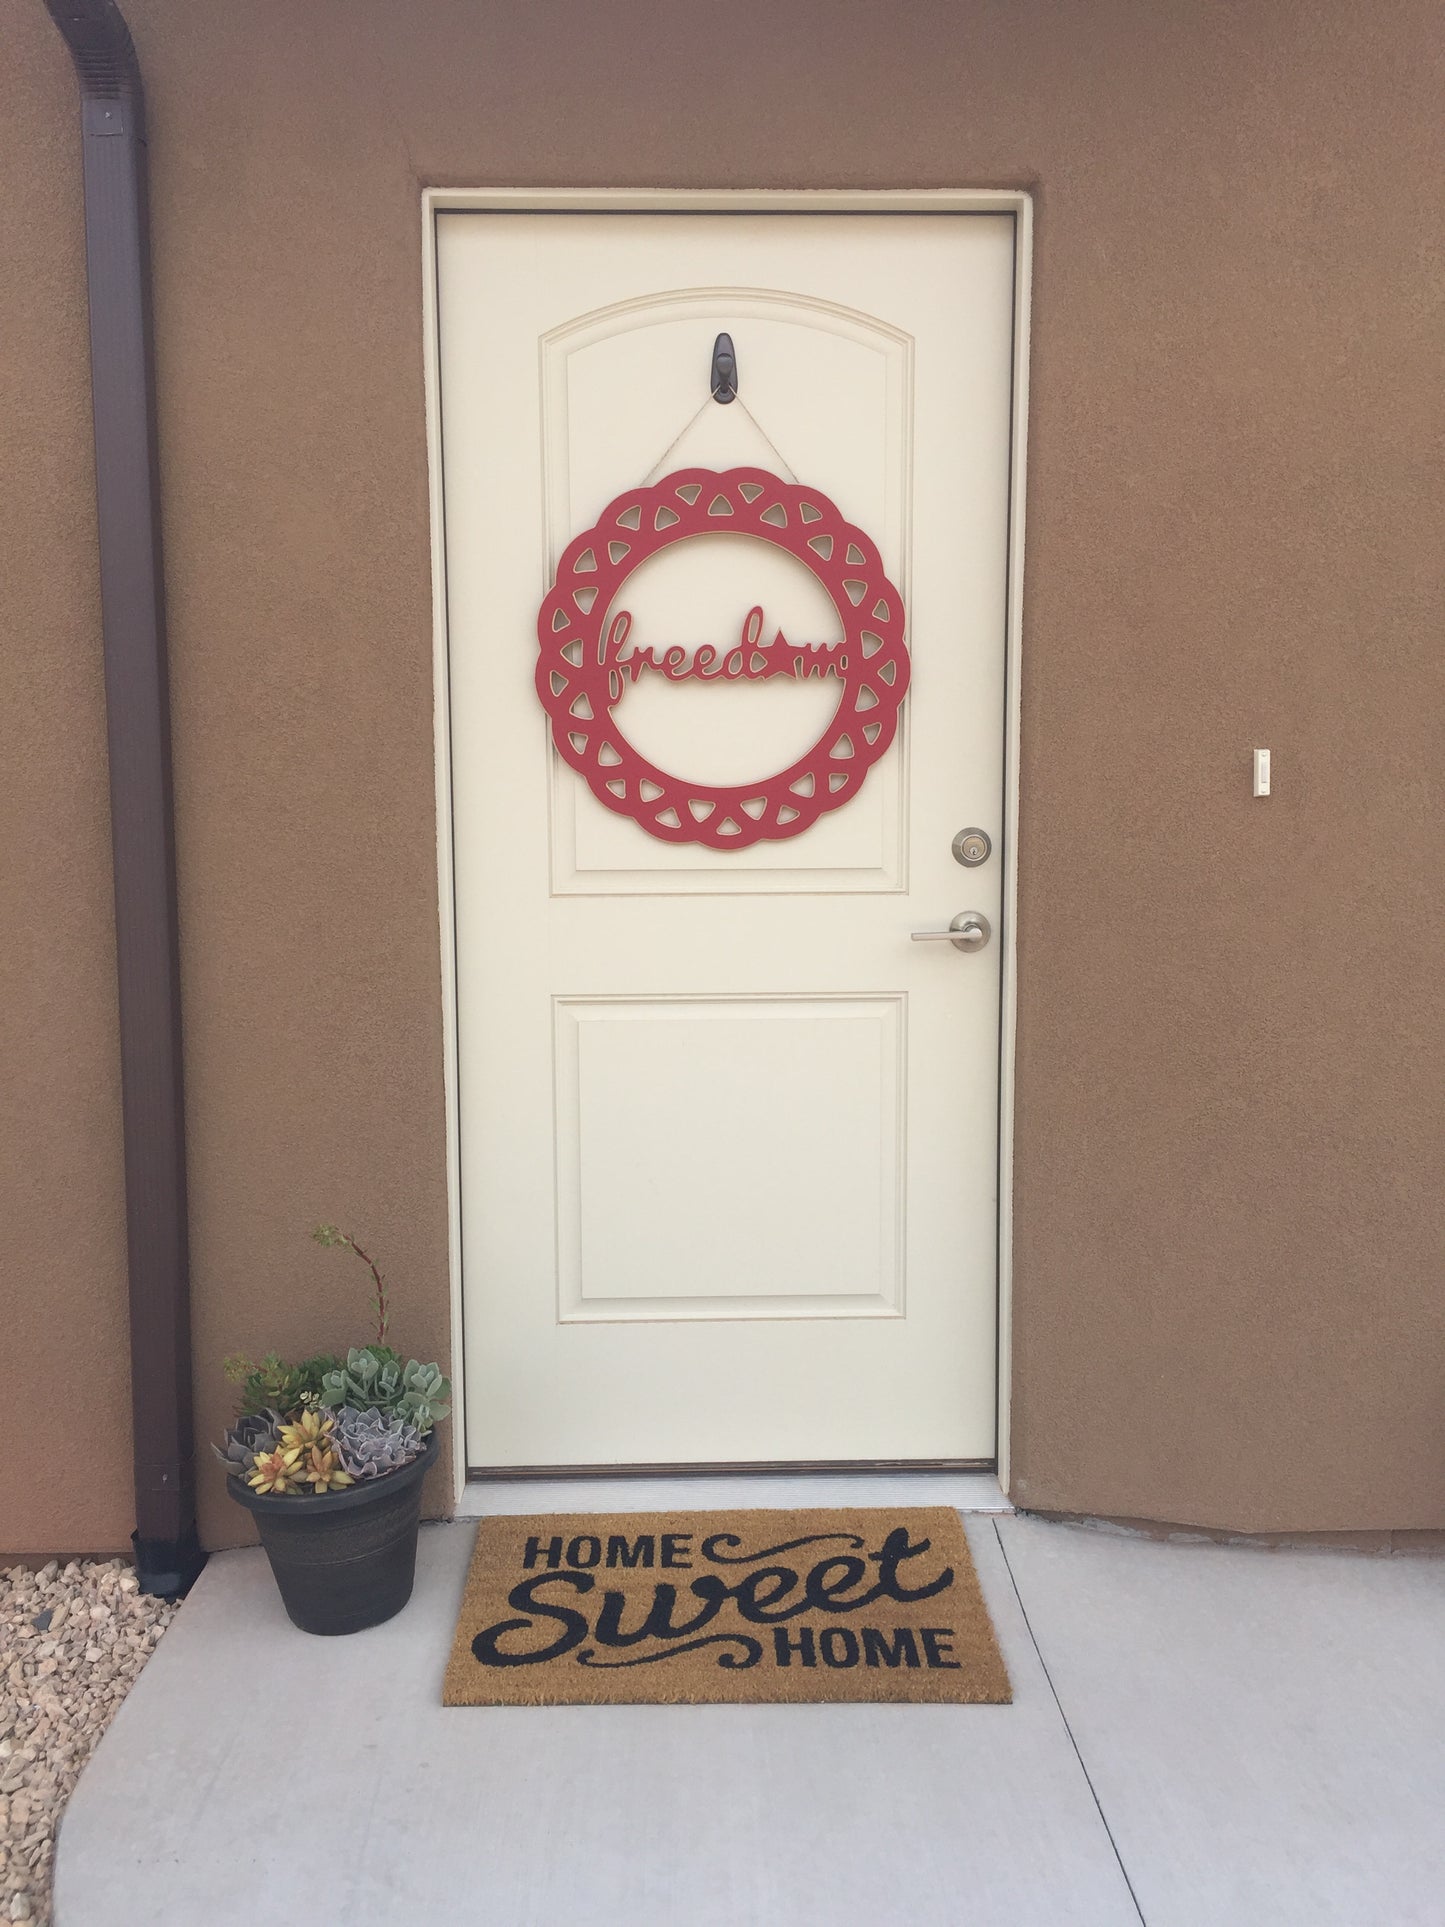 Modern 'Freedom' Lattice Circle Wreath – Elegant Door Decor in Custom Colors, 23.5" Statement Piece for Home Entrance